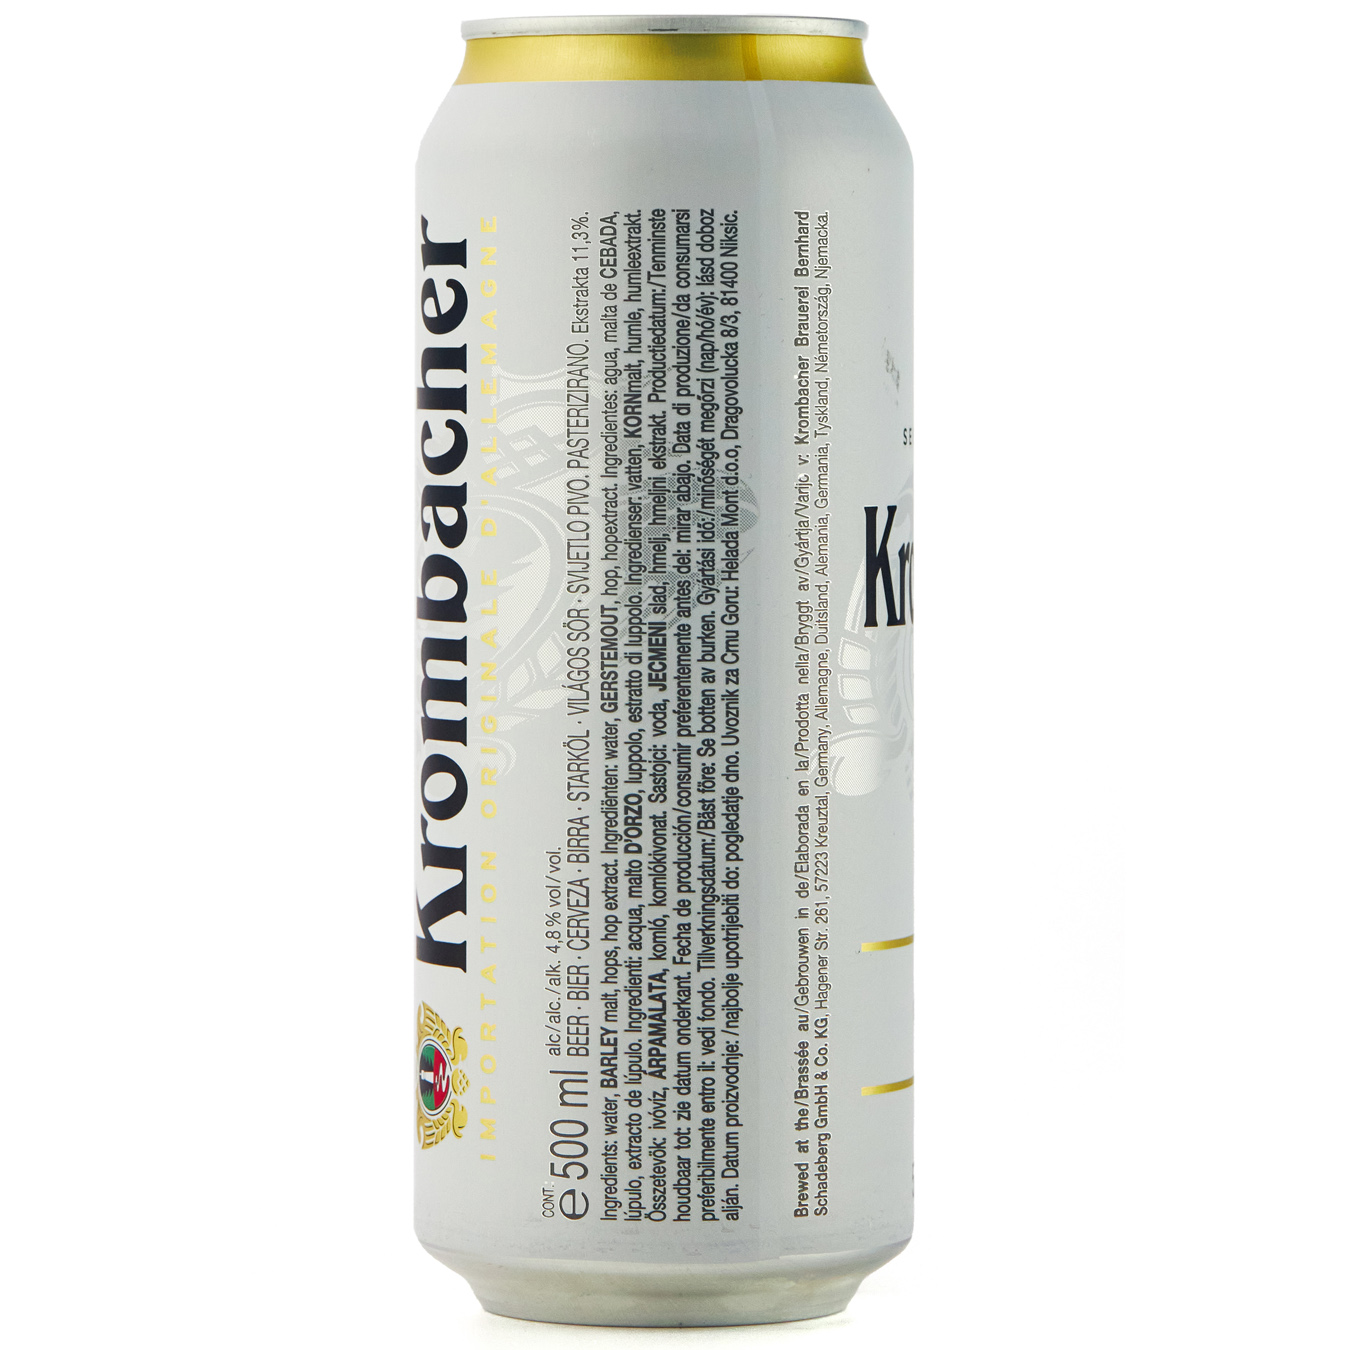 Krombacher Pils light beer can 4,8% 0,5l 2